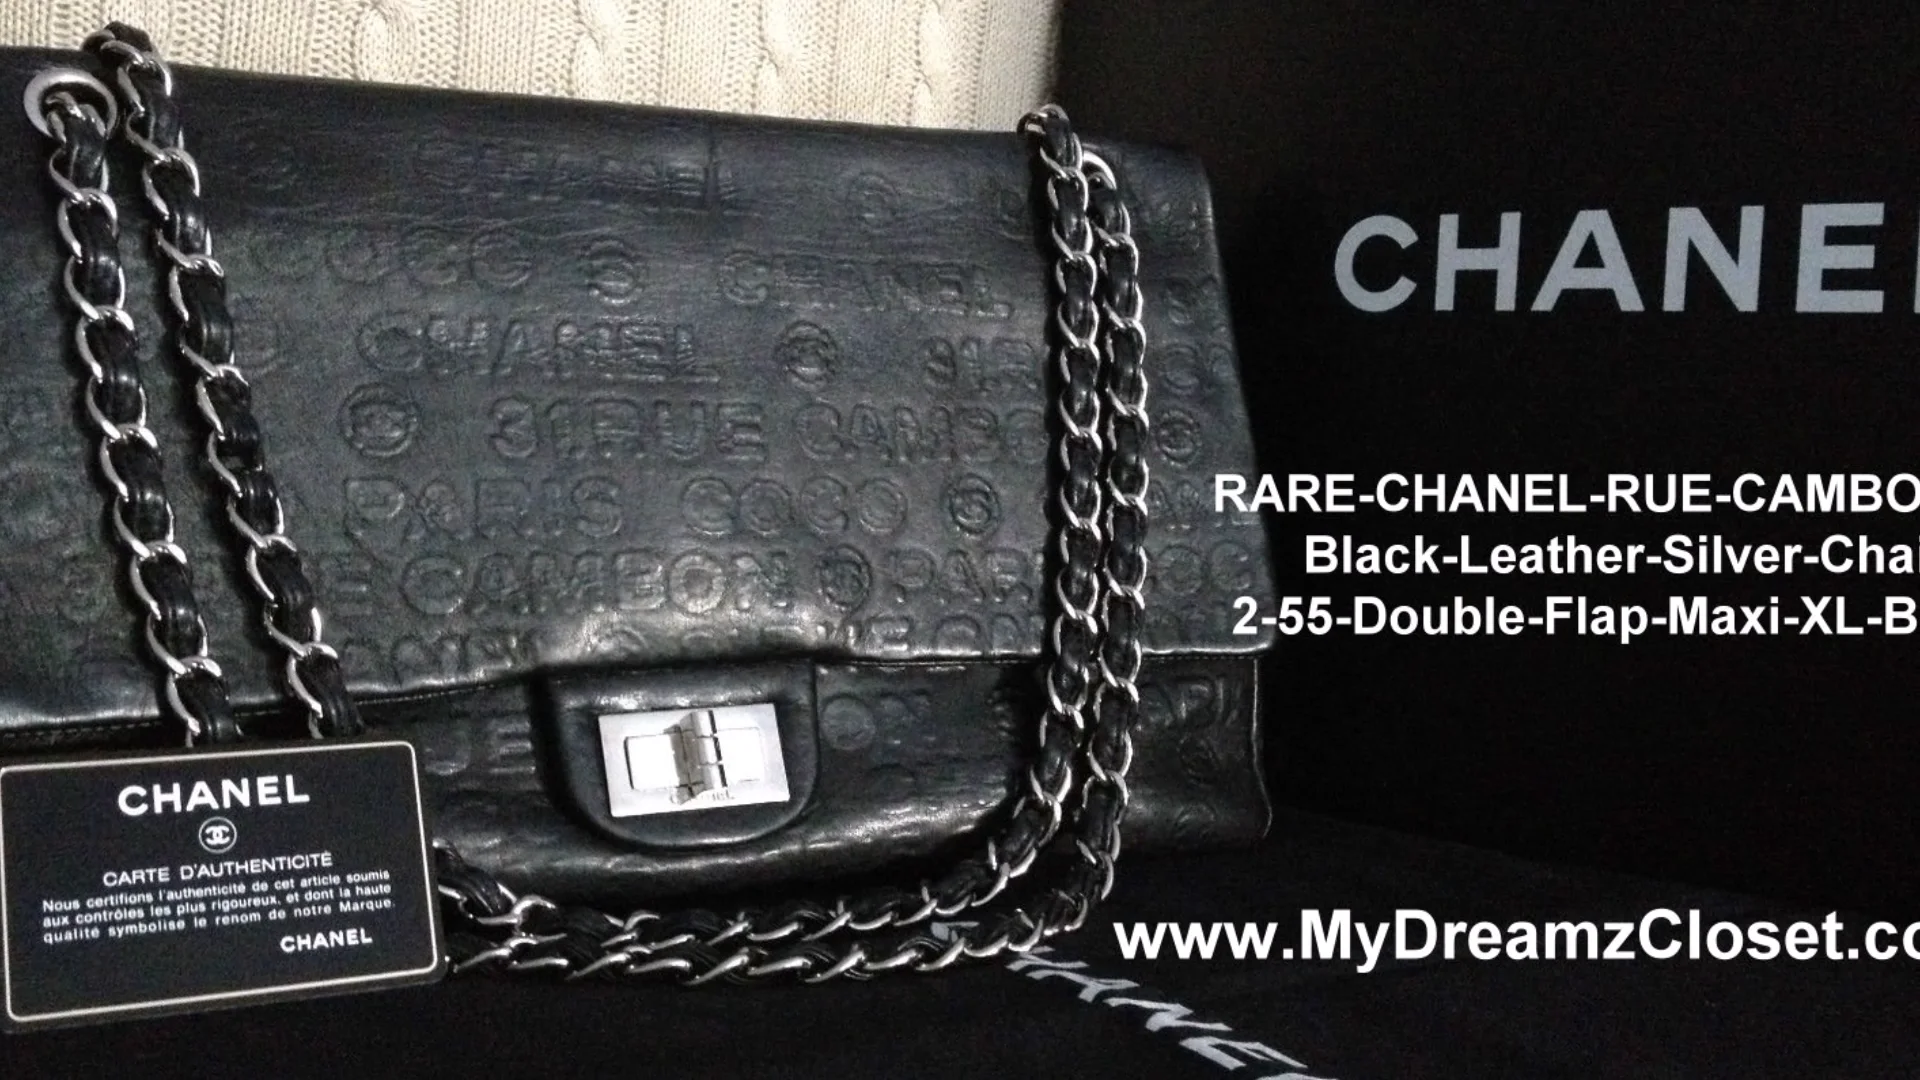 RARE-CHANEL-RUE-CAMBON-Black-Leather-Silver-Chain-2-55-Double-Flap